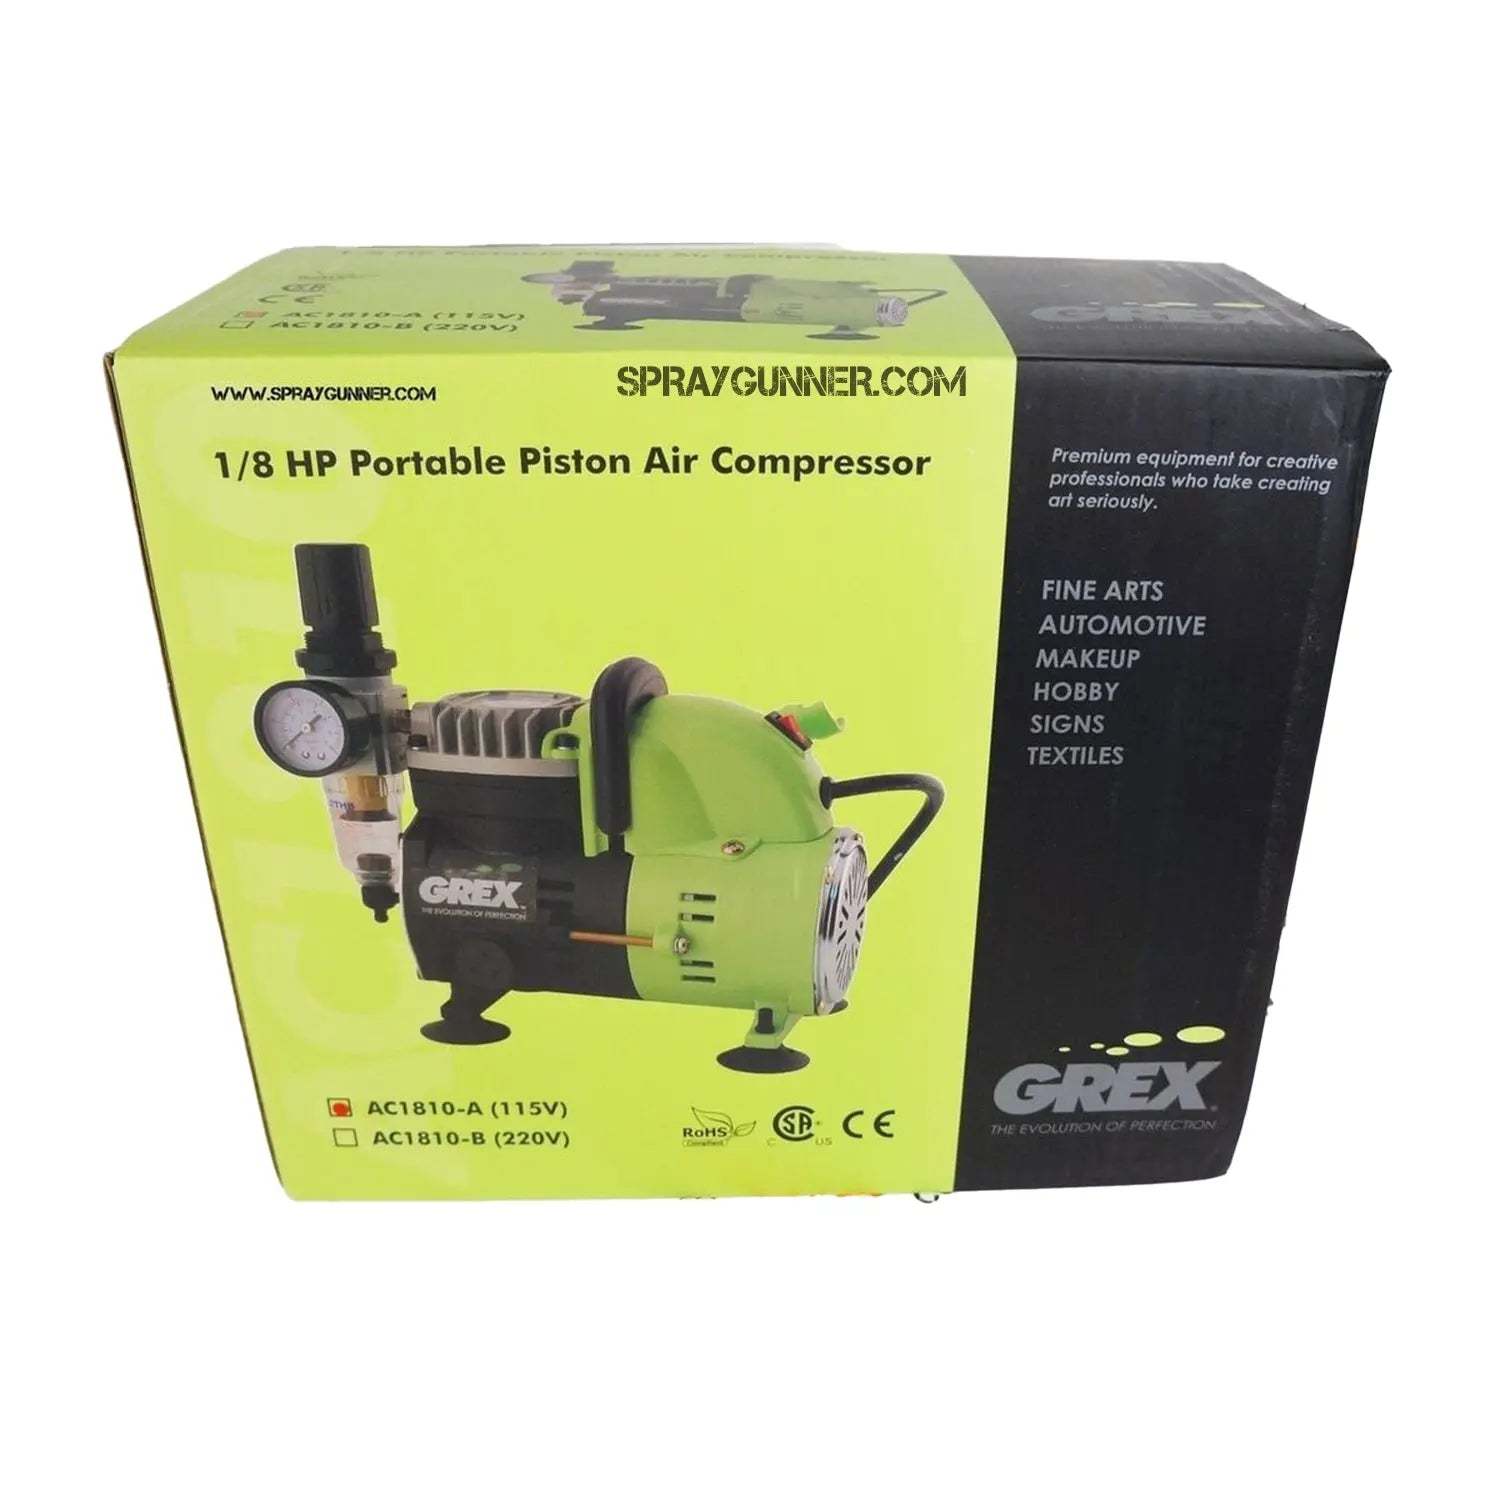 Grex 1/8 HP Portable Piston Air Compressor Grex Airbrush